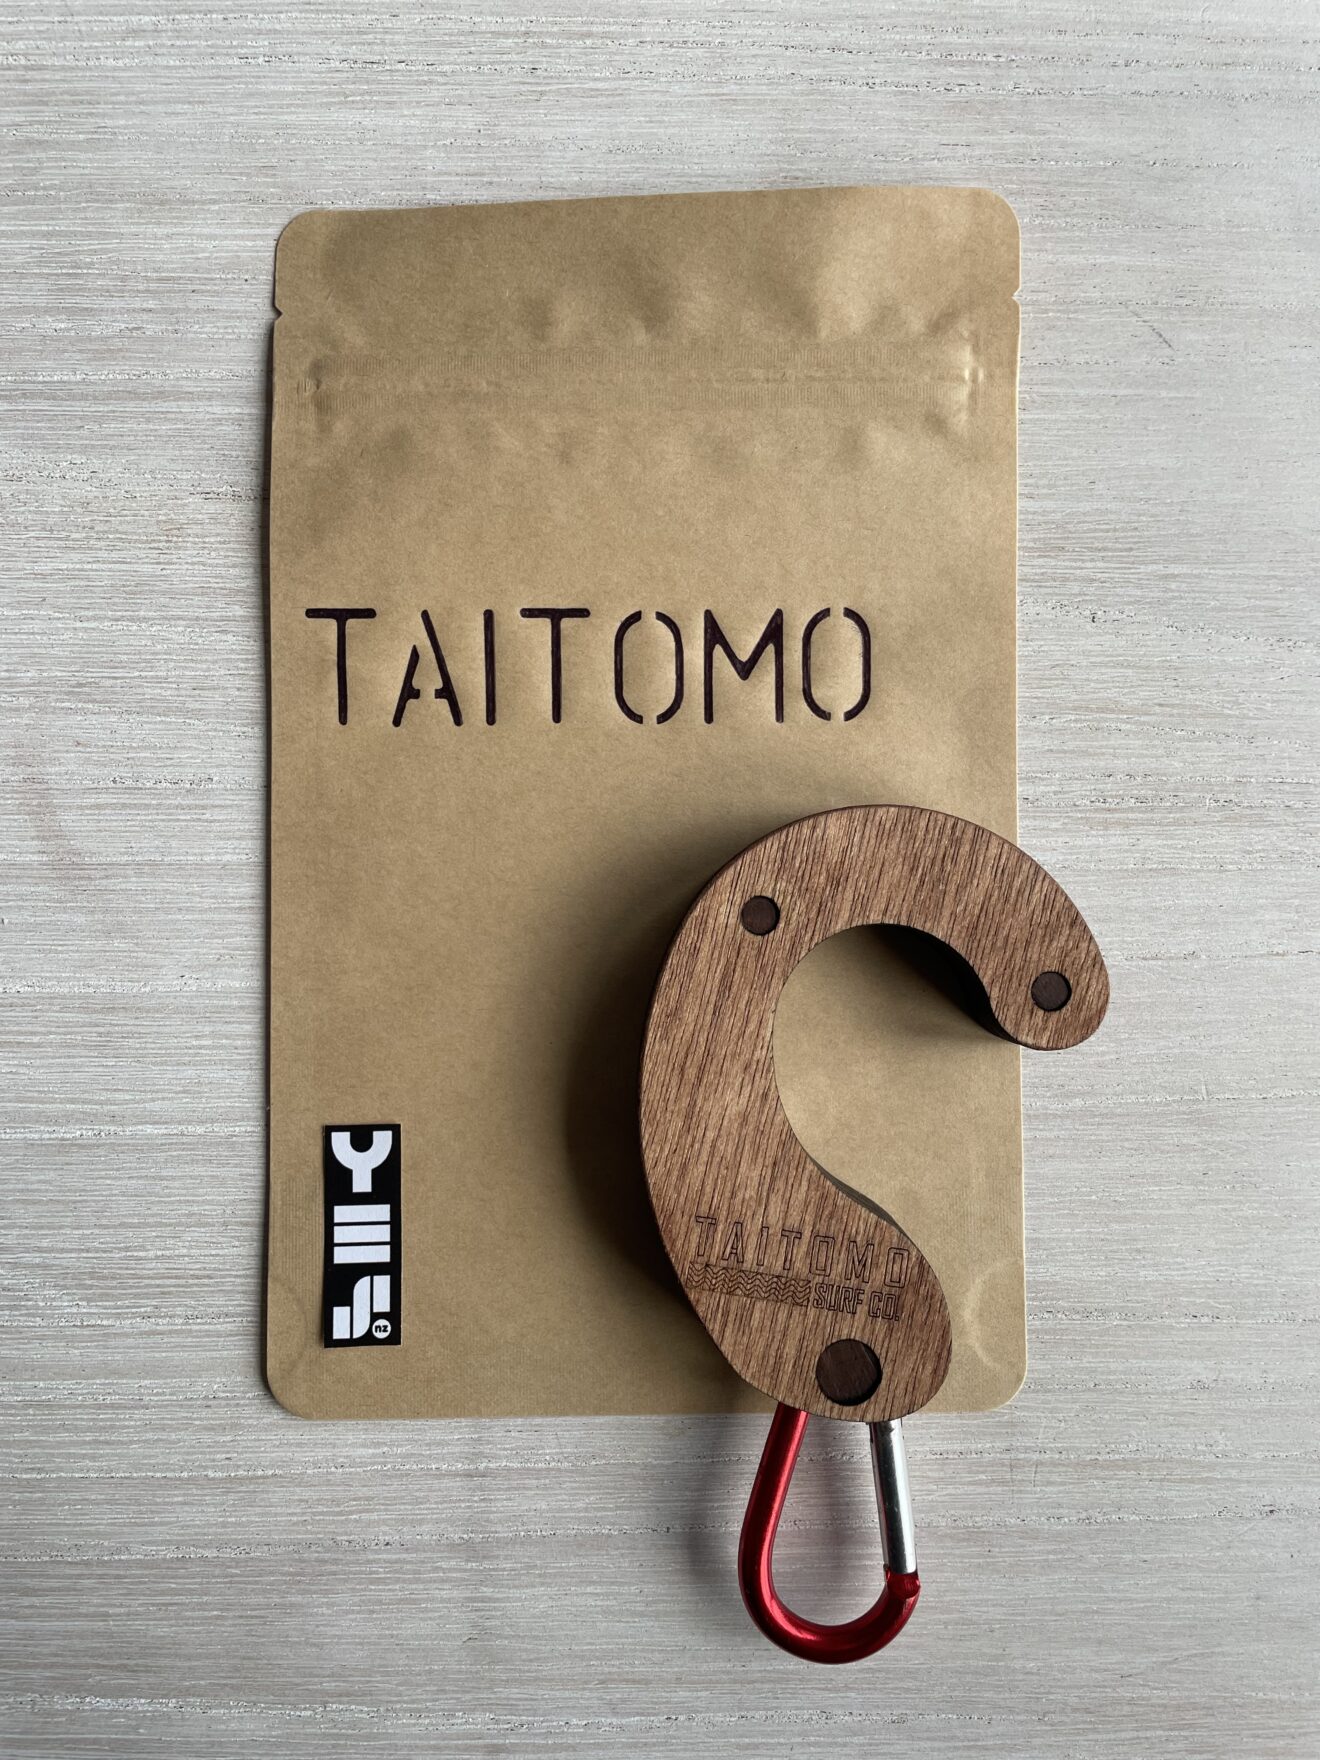 Taitomo – “Embrace Simplicity.”